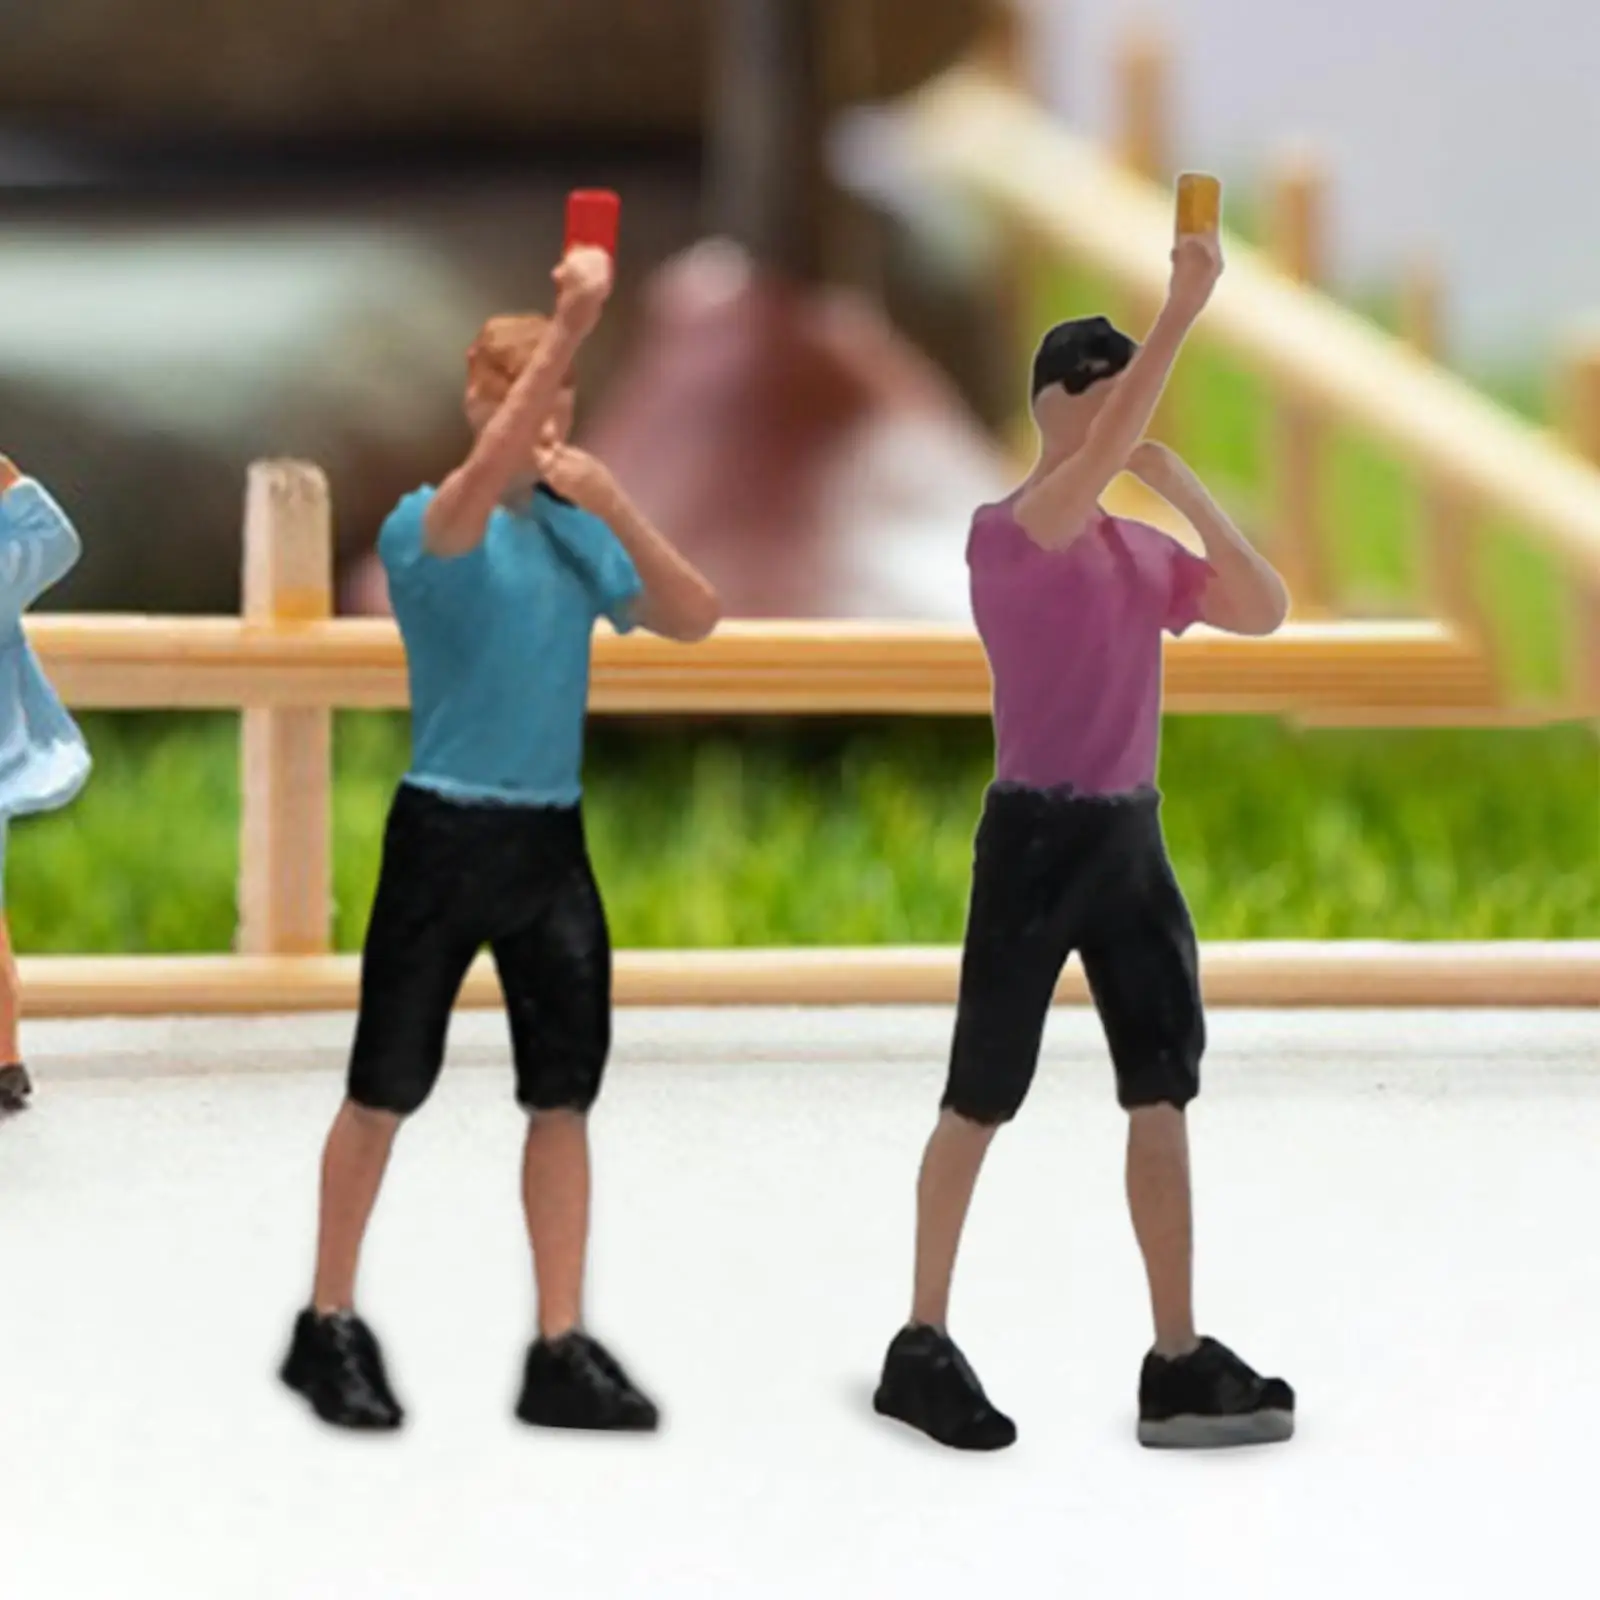 1:64 People Figures Desk Decoration Miniature Referee for Scenery Landscape